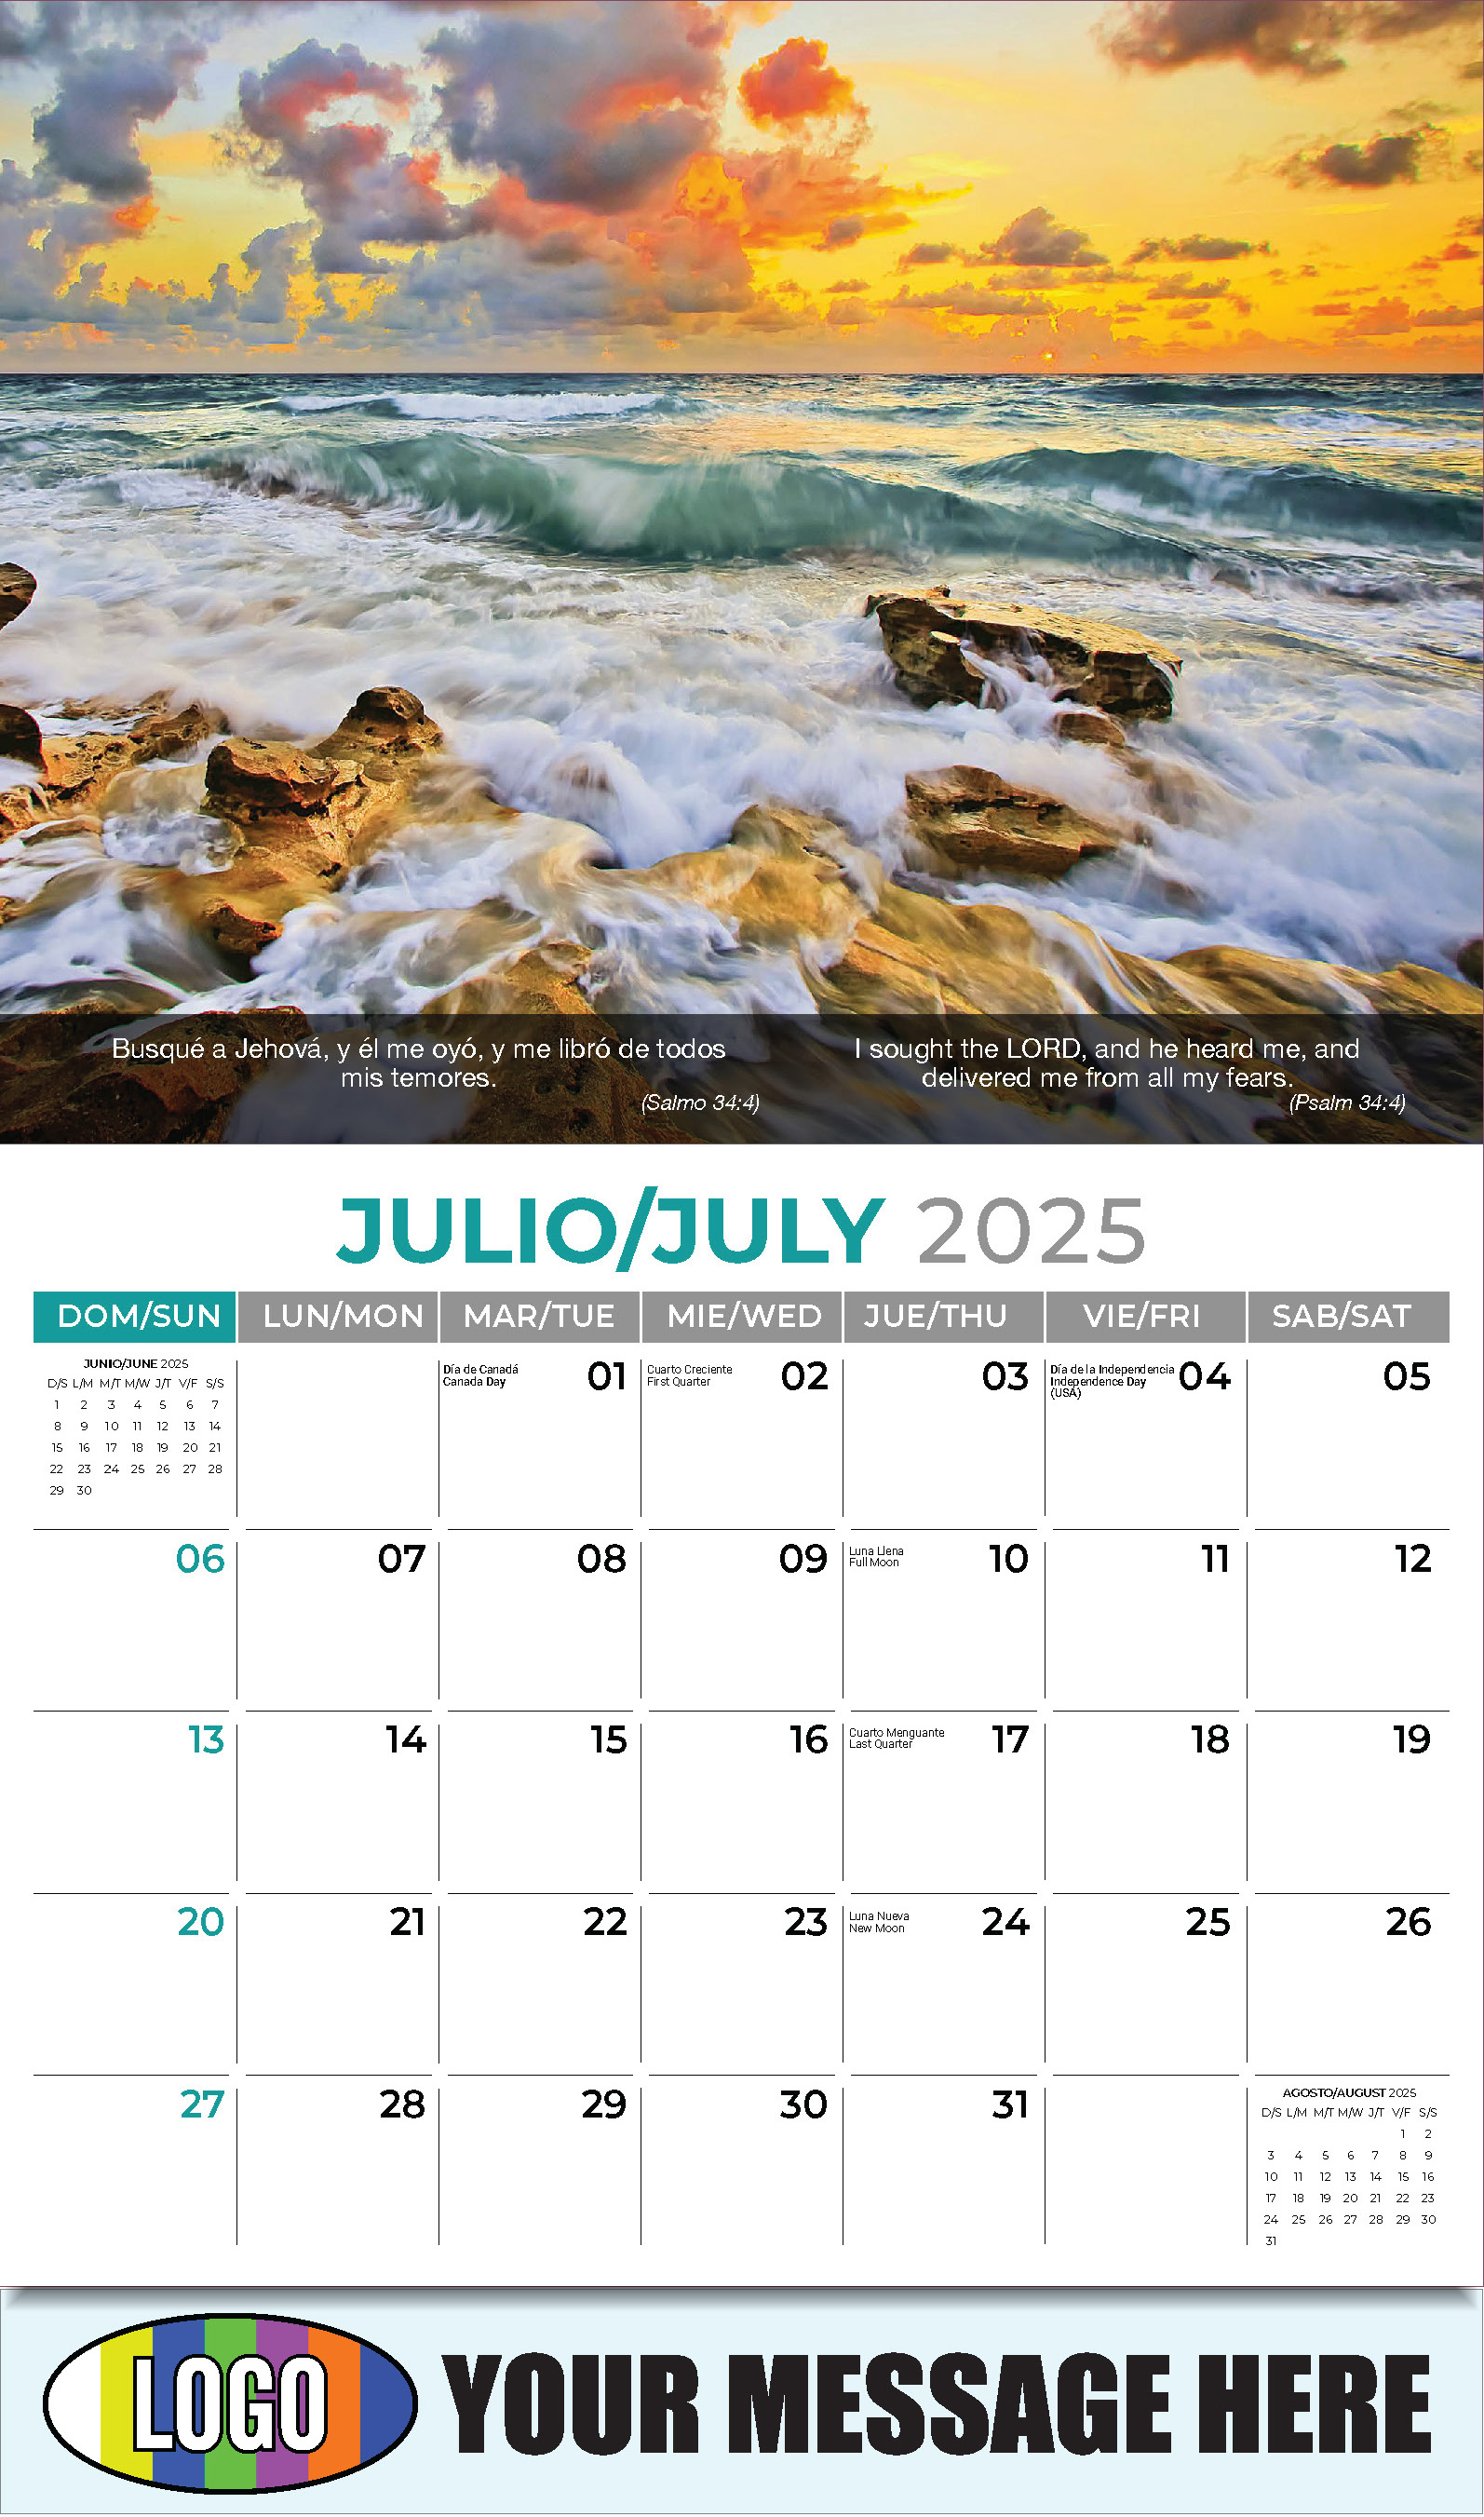 Faith Passages Bilingual 2025 Christian Business Advertising Calendar - July